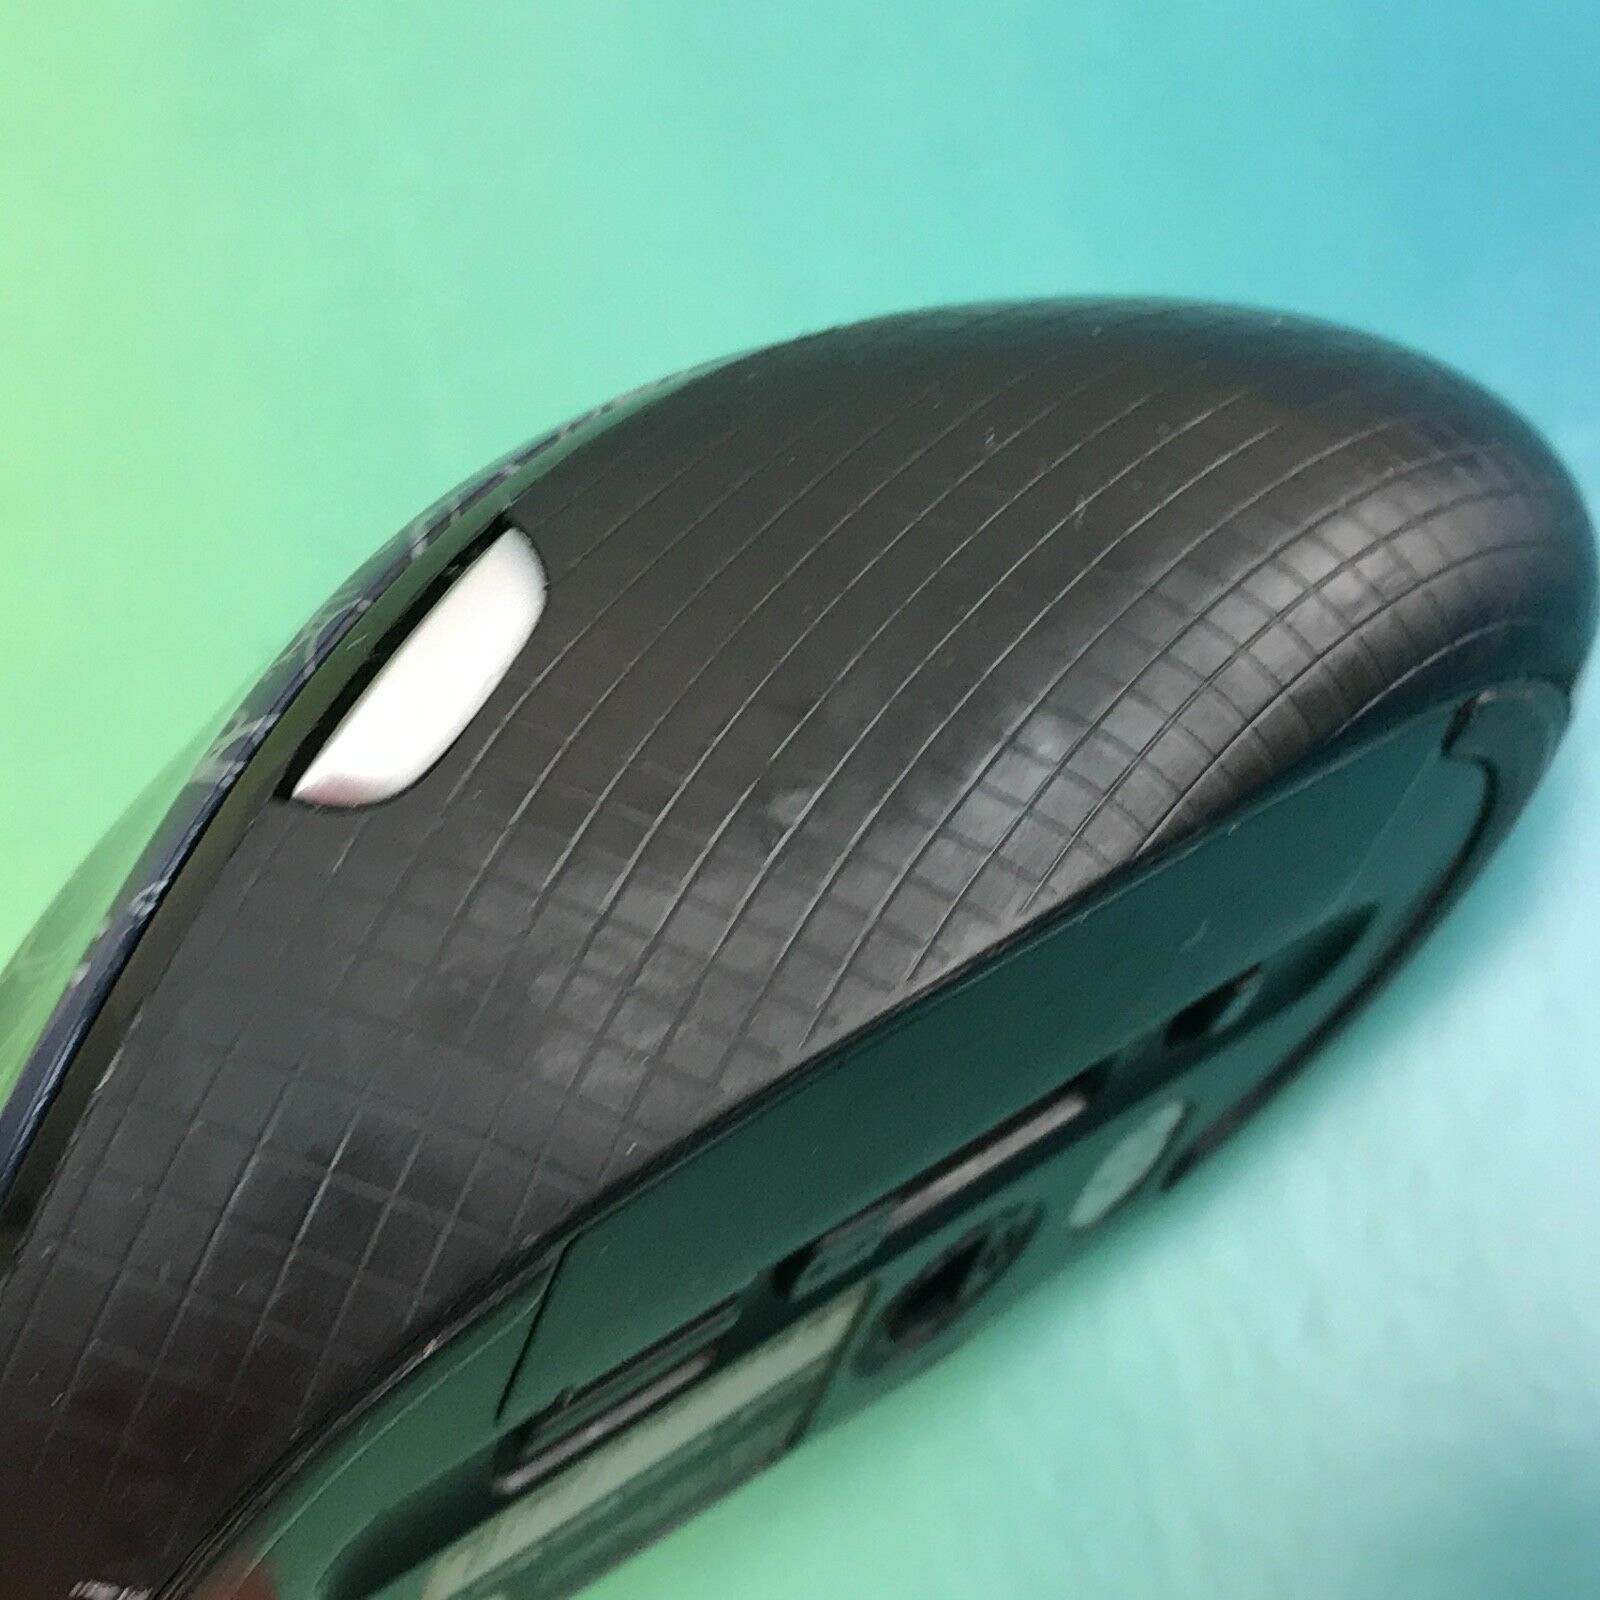 microsoft wireless mobile mouse 4000 driver update win 7